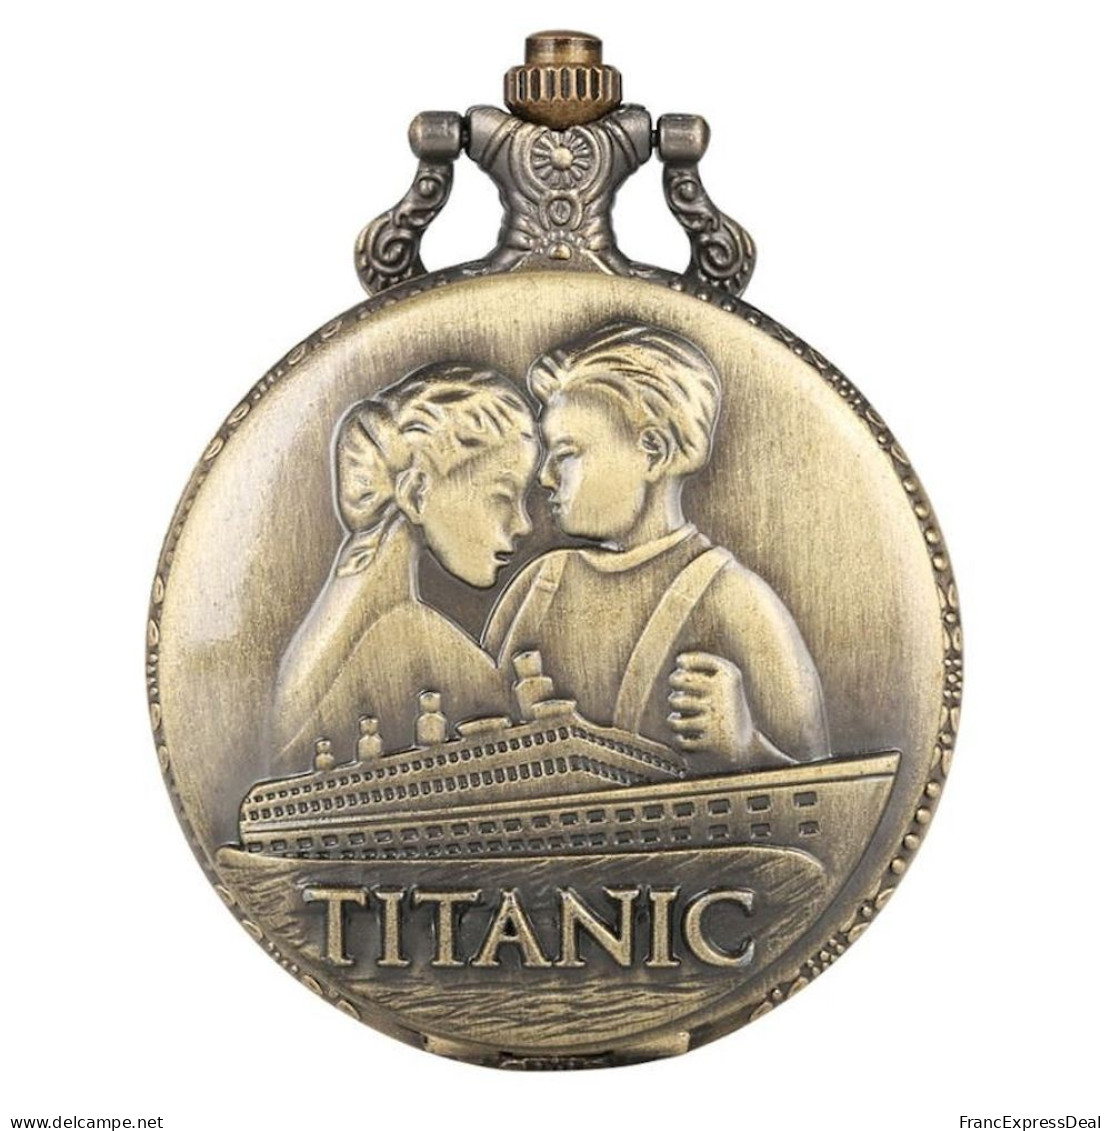 Montre Gousset NEUVE - RMS Titanic Jack Dawson Et Rose Dewitt Bukater - Watches: Bracket